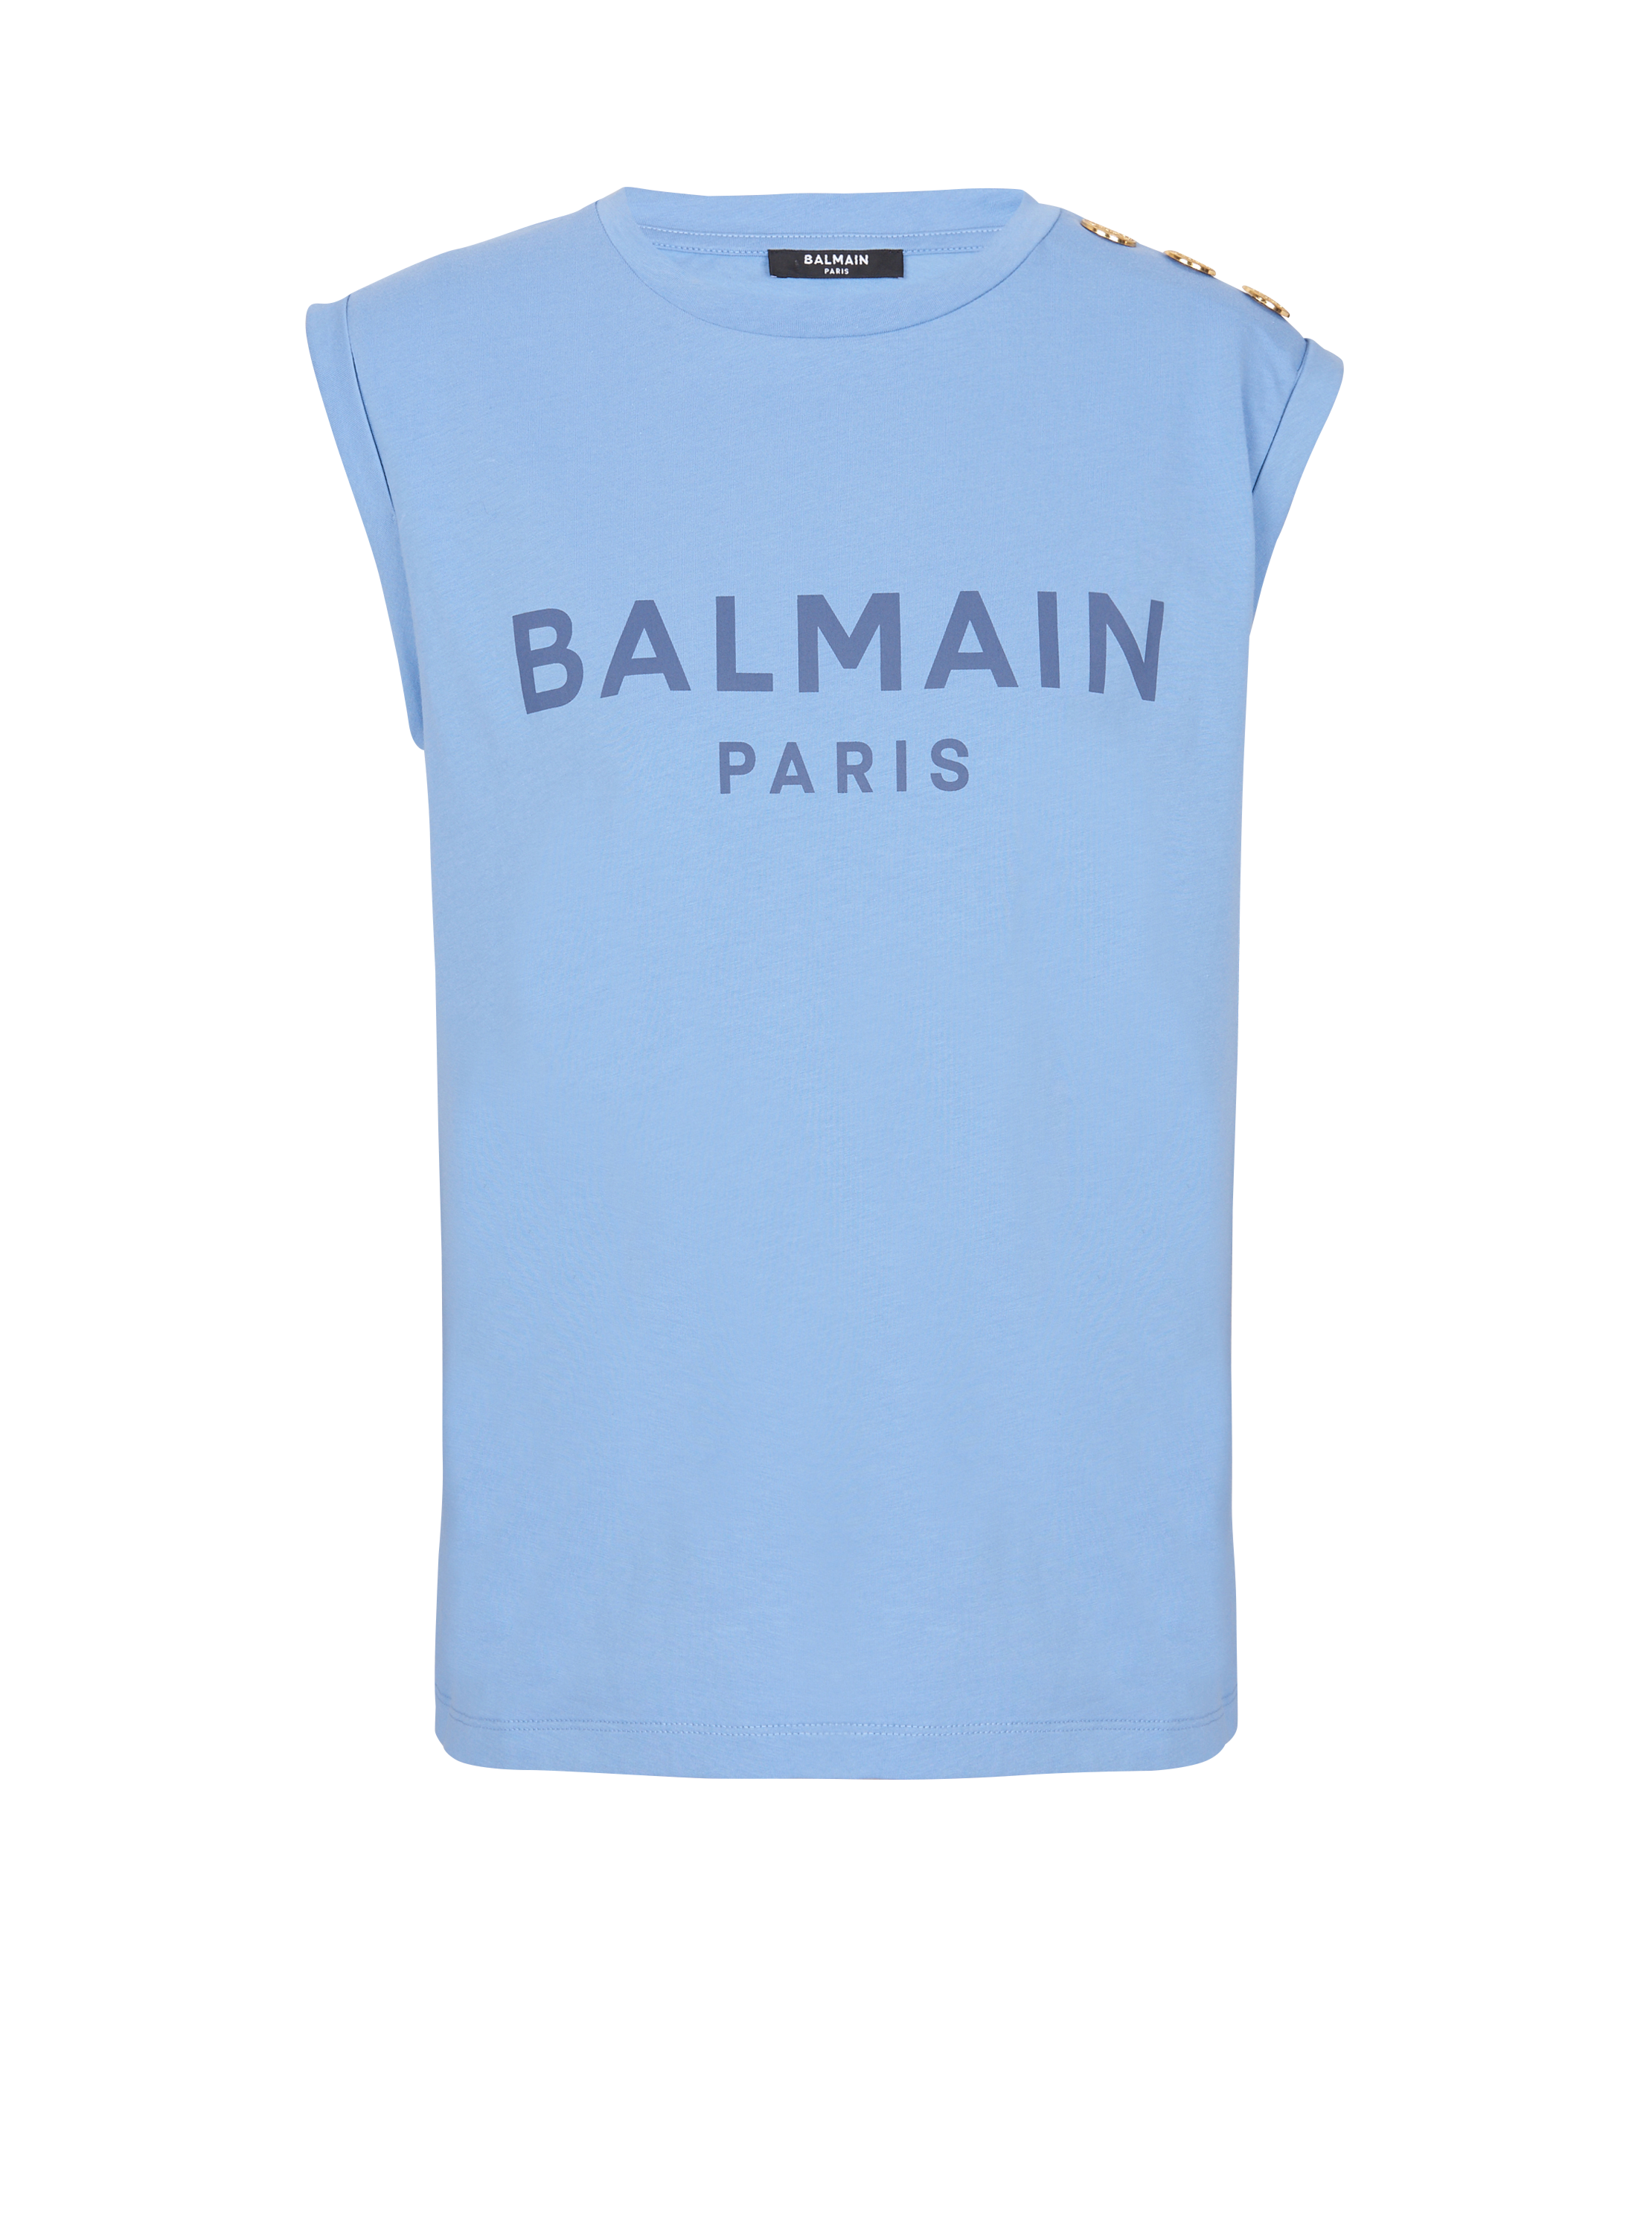 Camiseta sin mangas con logotipo de Balmain estampado, azul, hi-res